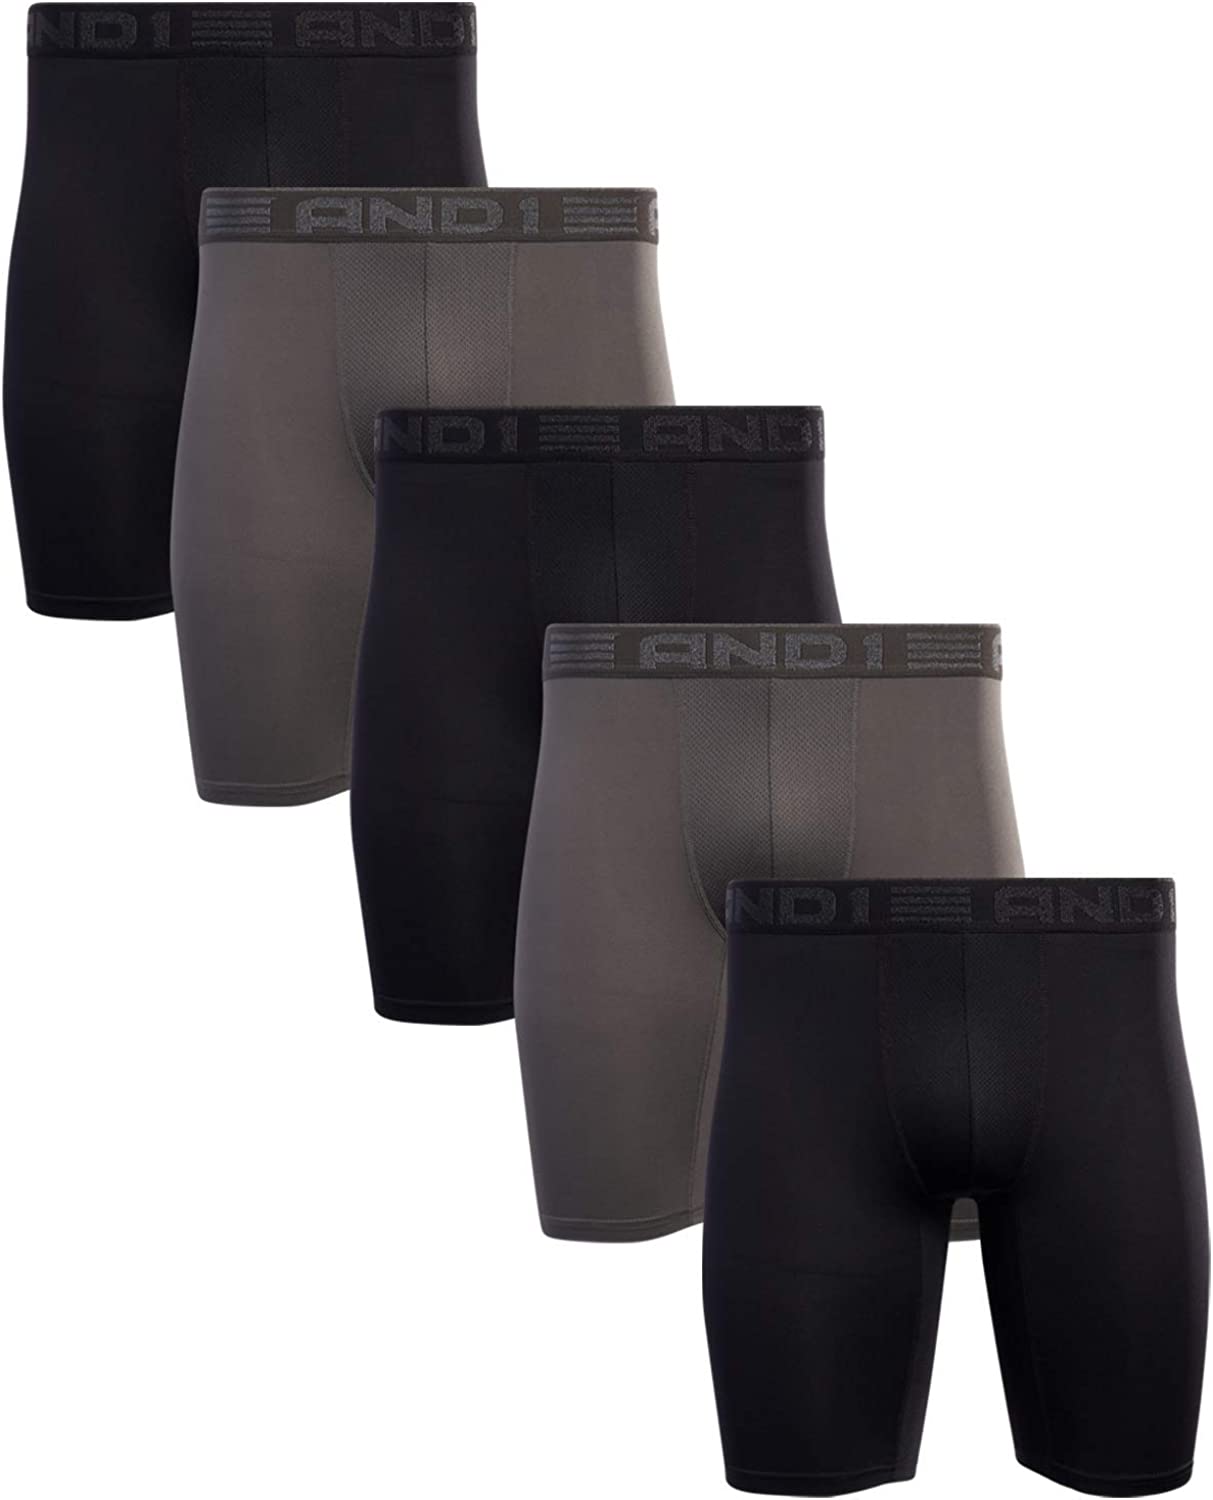 AND1 Men’s Underwear – Long Leg Performance Compression Boxer Briefs (5  Pack)